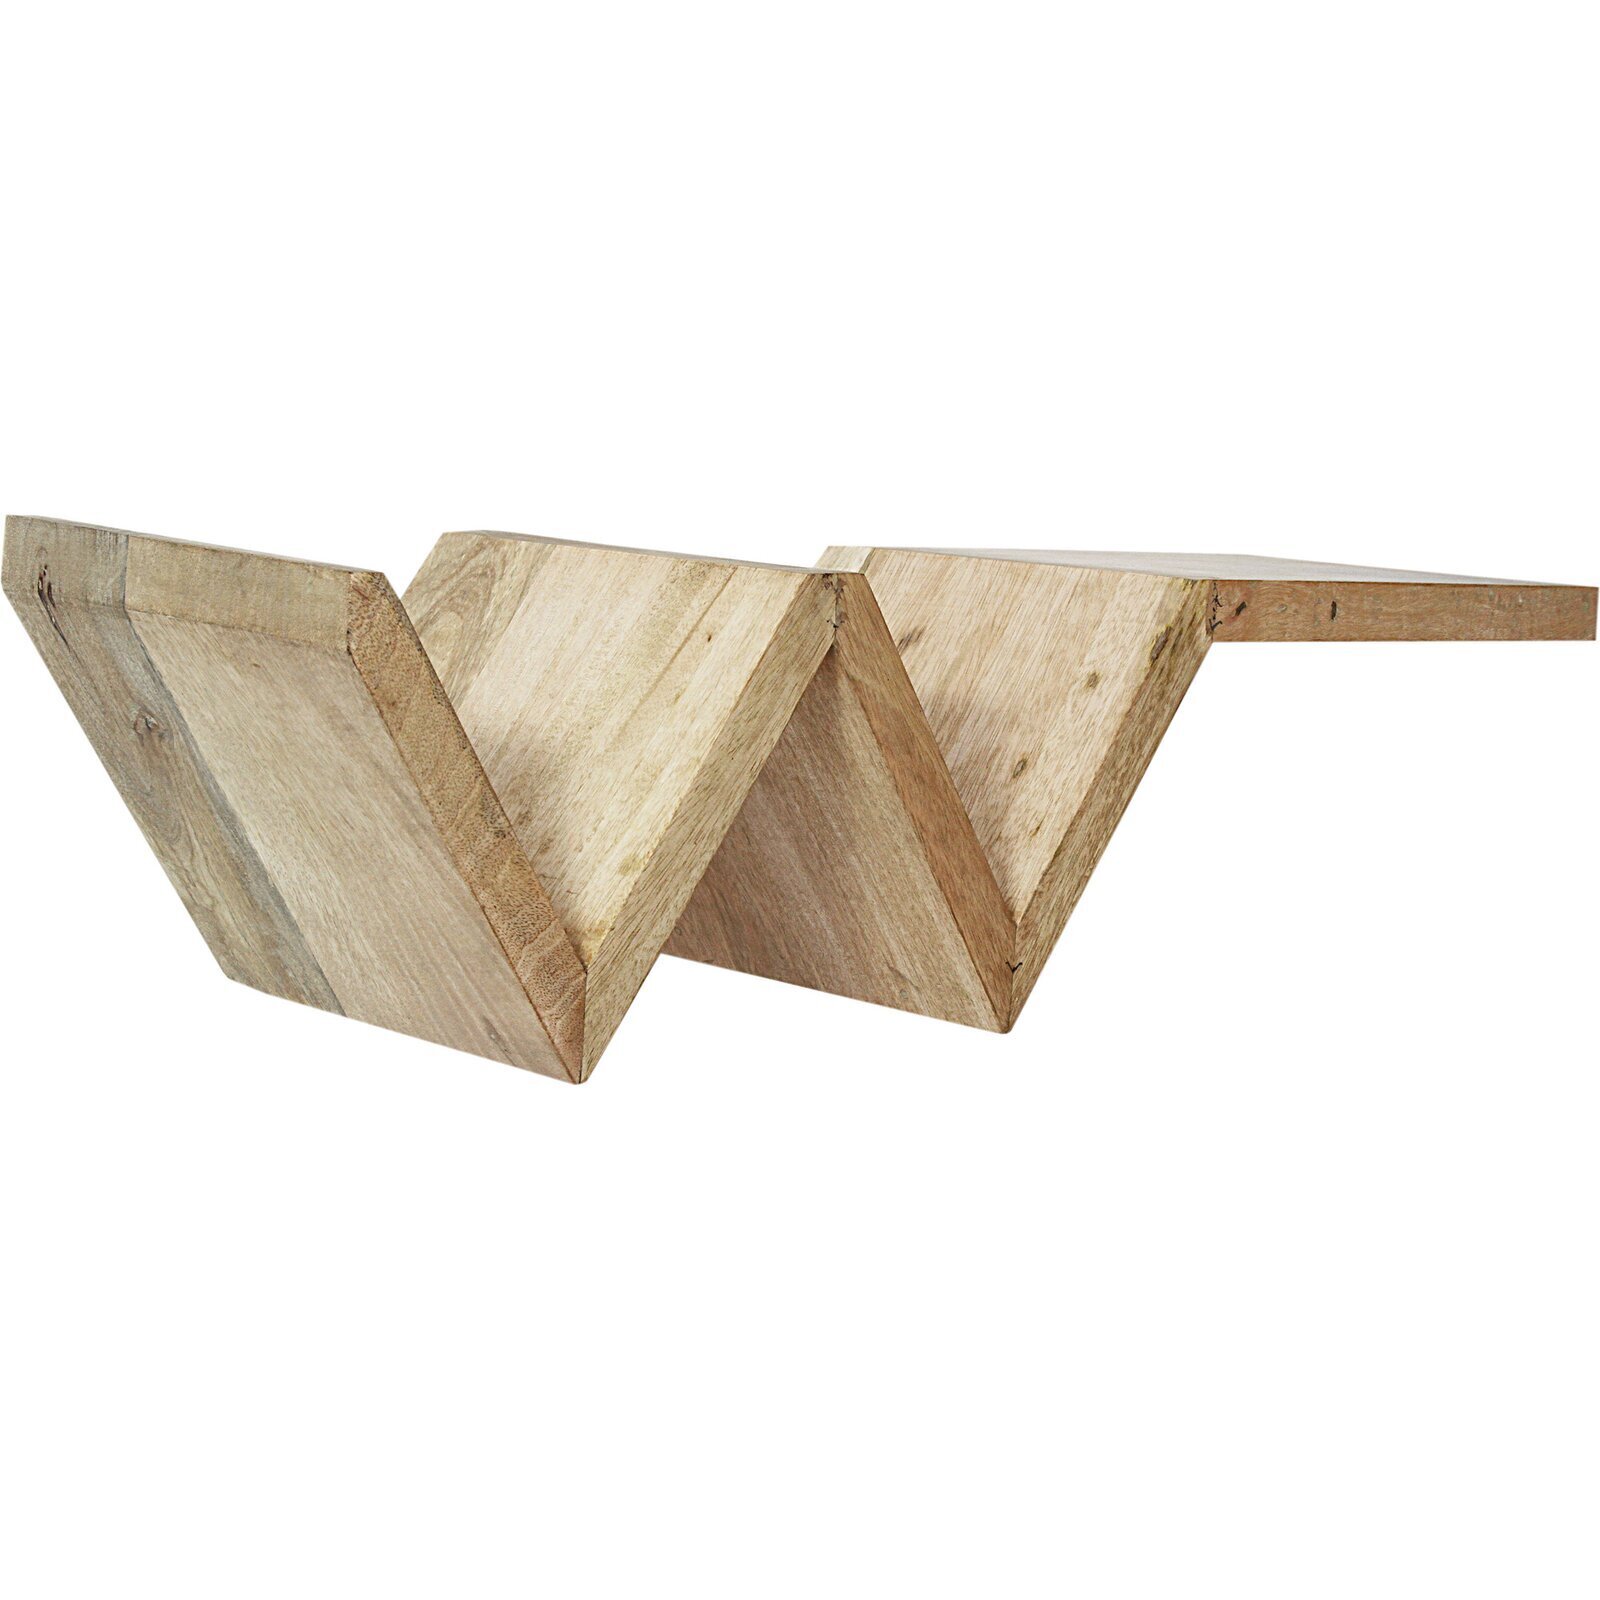 Natural wood shelf with a zig zag design 